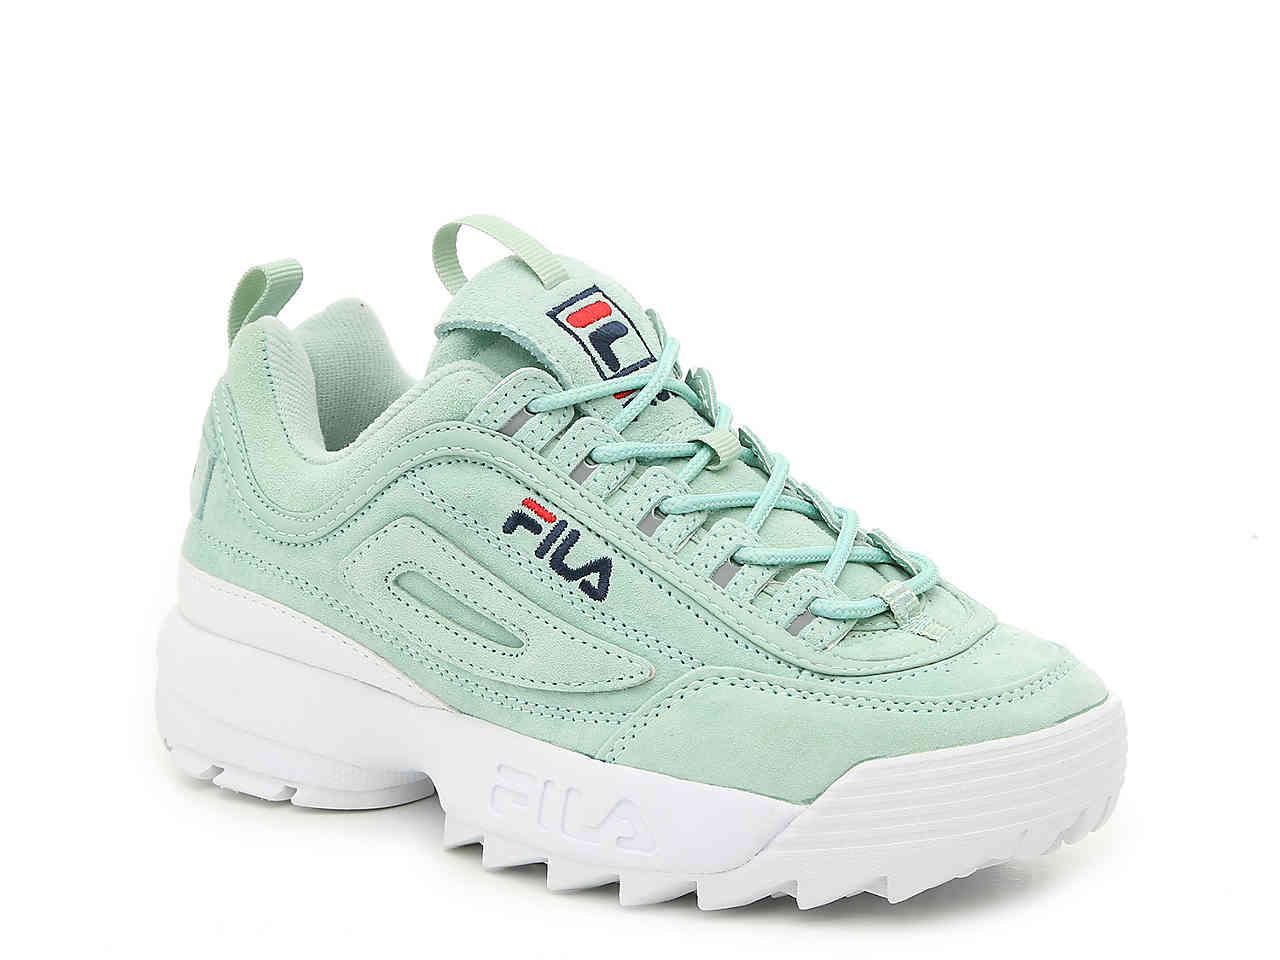 Fila Suede Disruptor Ii Premium Sneaker in Mint Green (Green) - Lyst